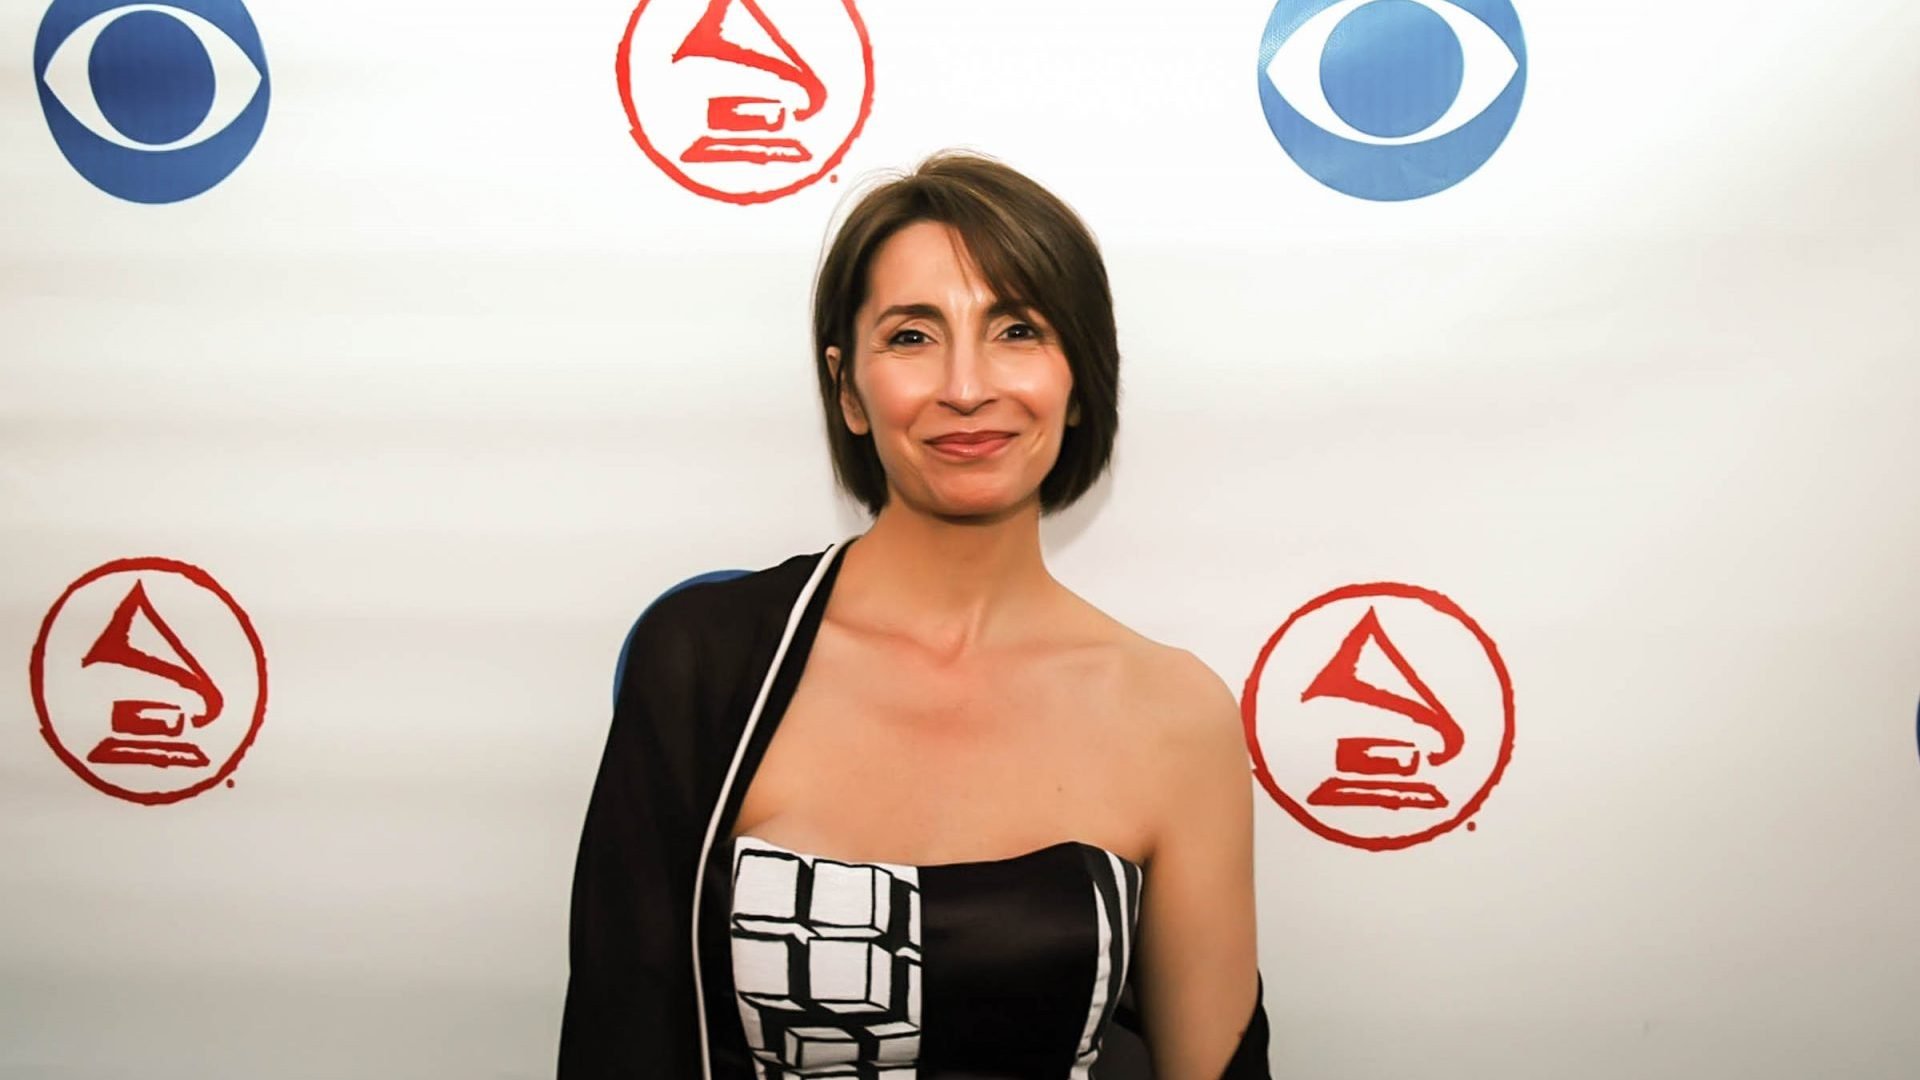 Maria Volonte at the Latin Grammy Awards